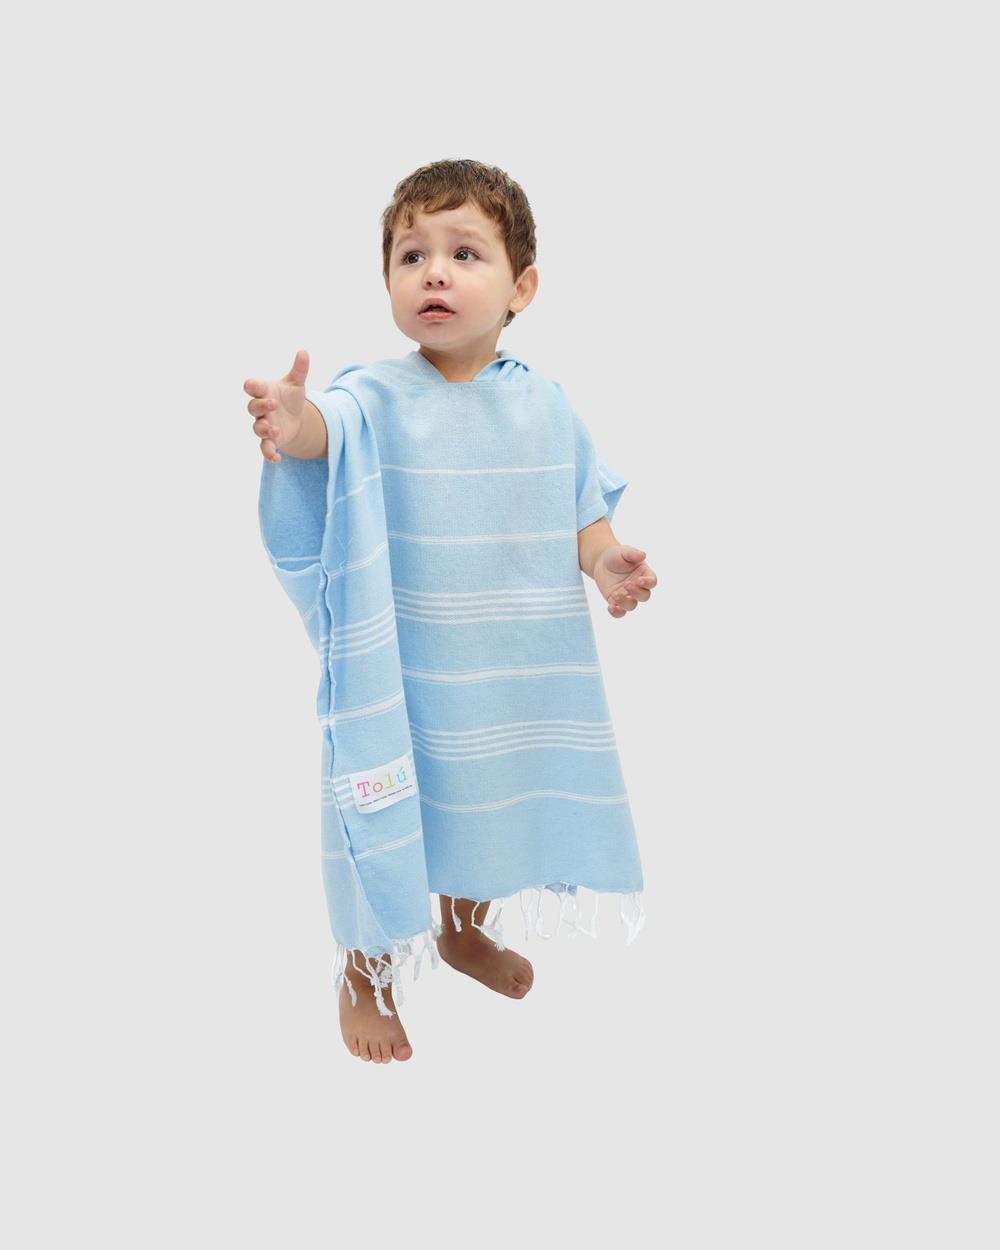 Tolu Australia - Baby Blue Kids Hooded Beach Towel - Towels (Baby Blue Kids Hooded Beach Towel) Baby Blue Kids Hooded Beach Towel